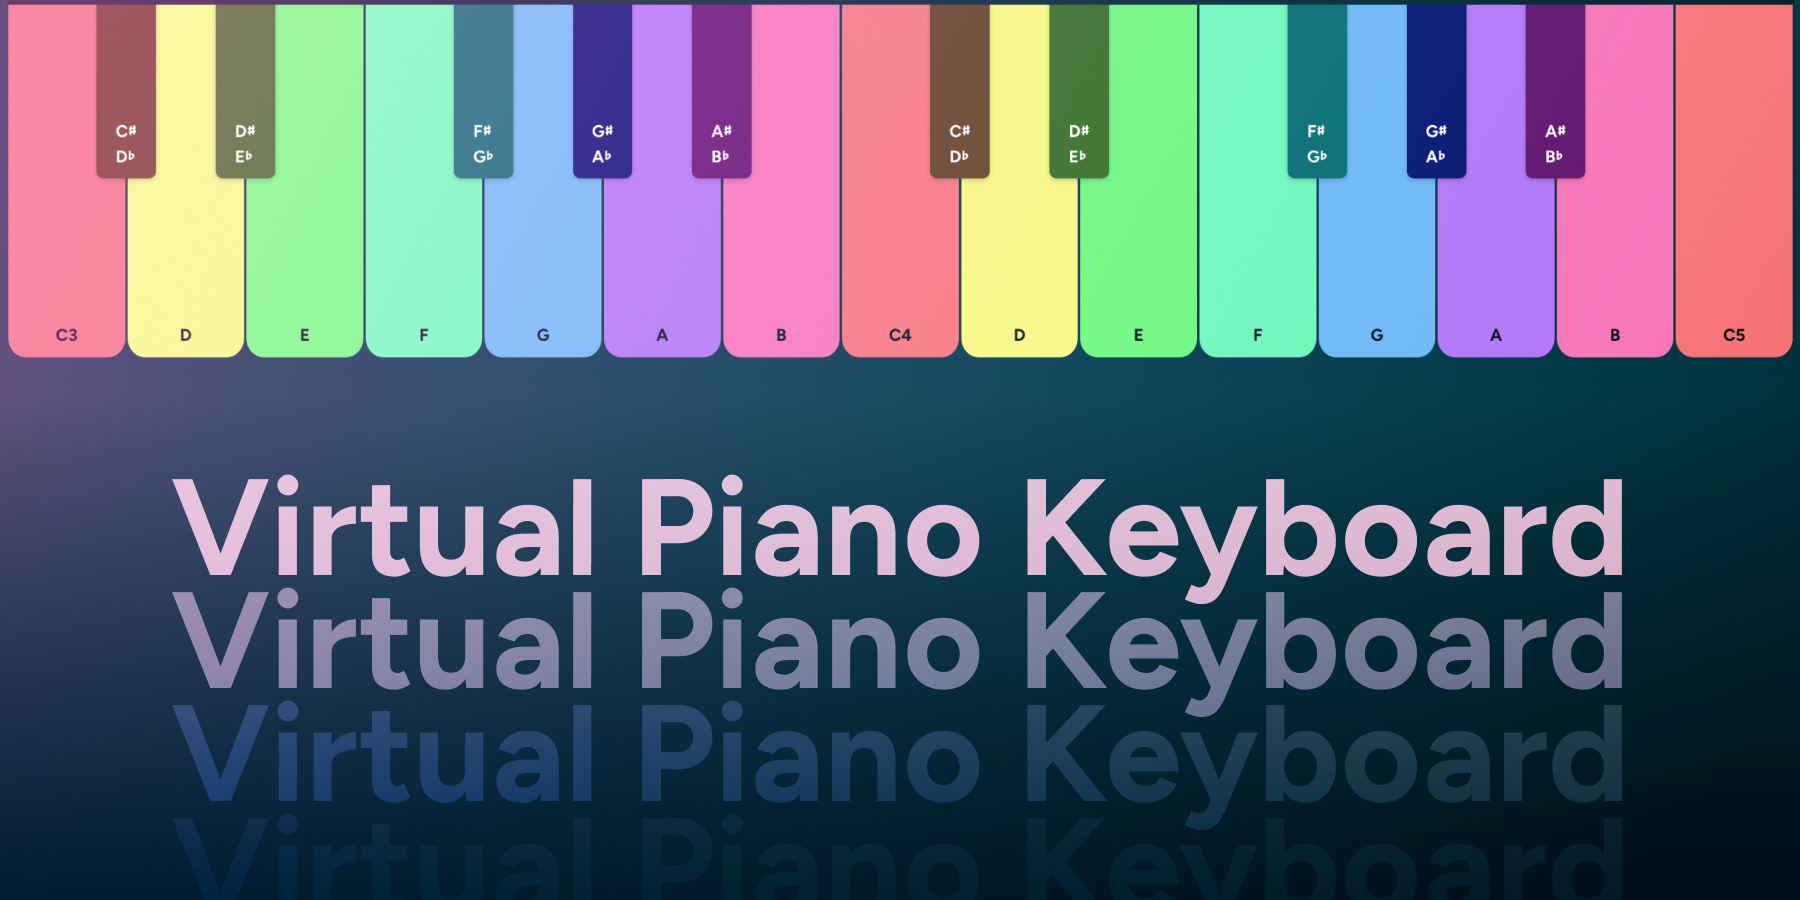 Virtual Piano - Online Piano Keyboard